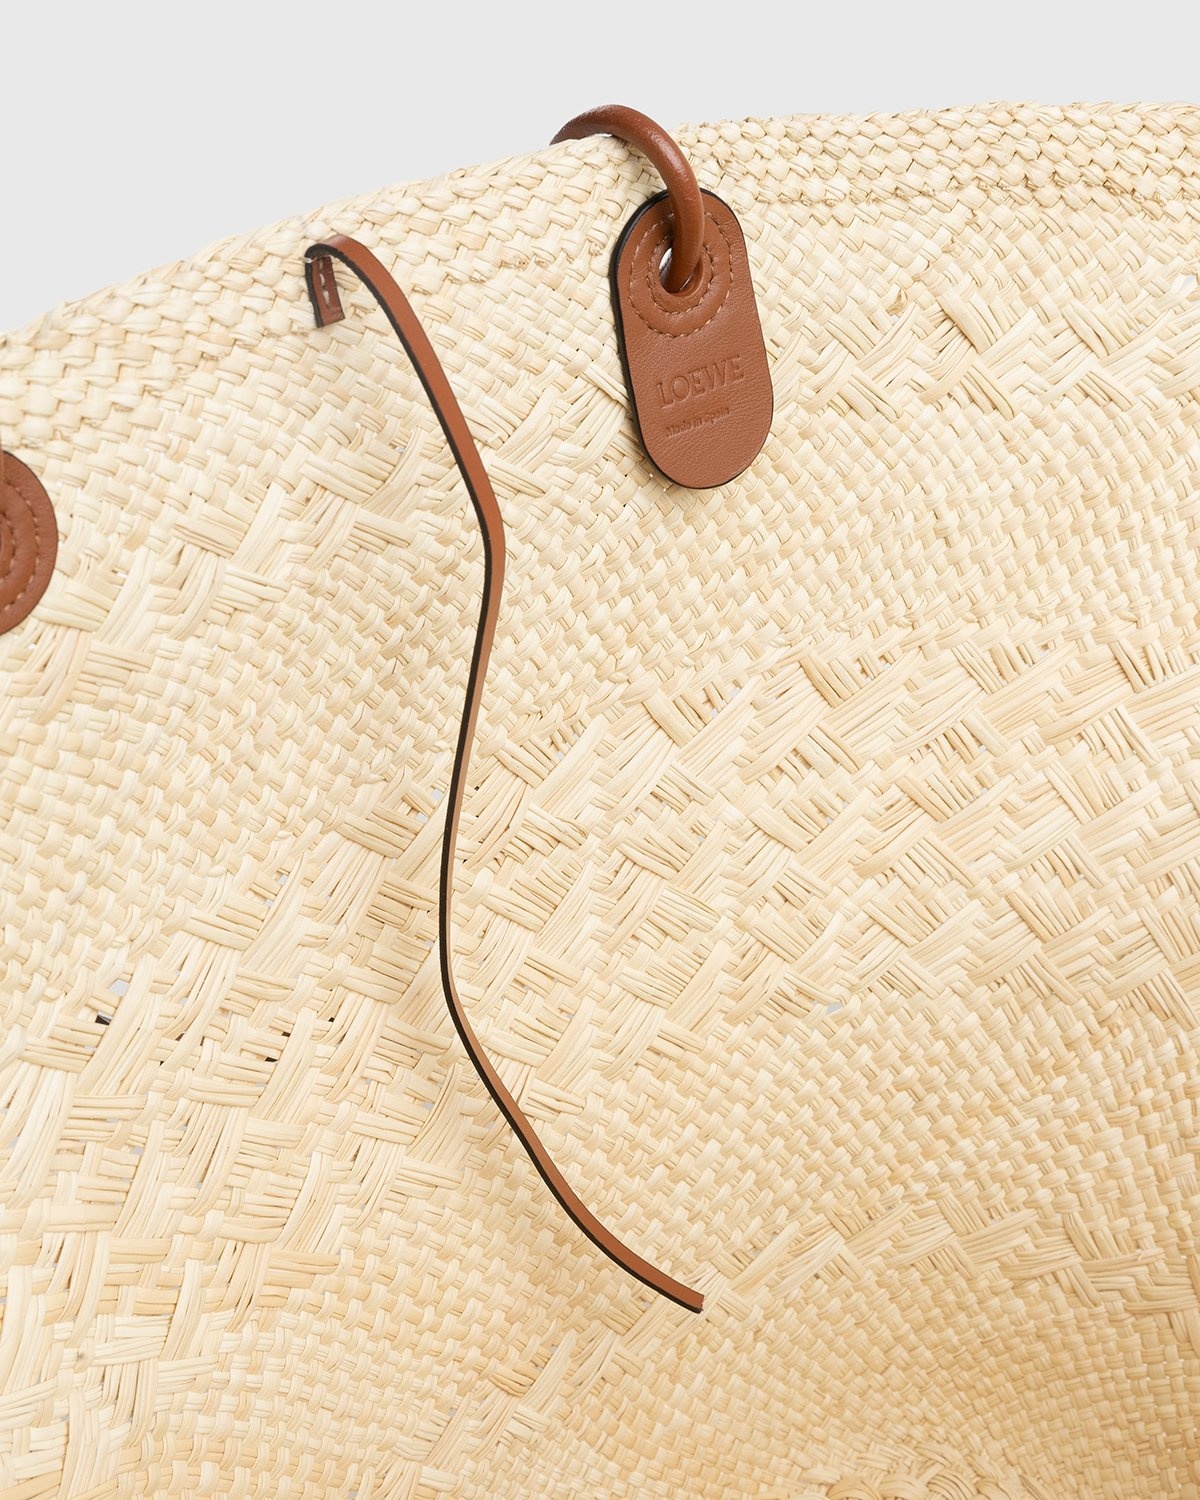 Loewe – Paula's Ibiza Large Anagram Basket Bag Natural/Tan - Bags - Beige - Image 4